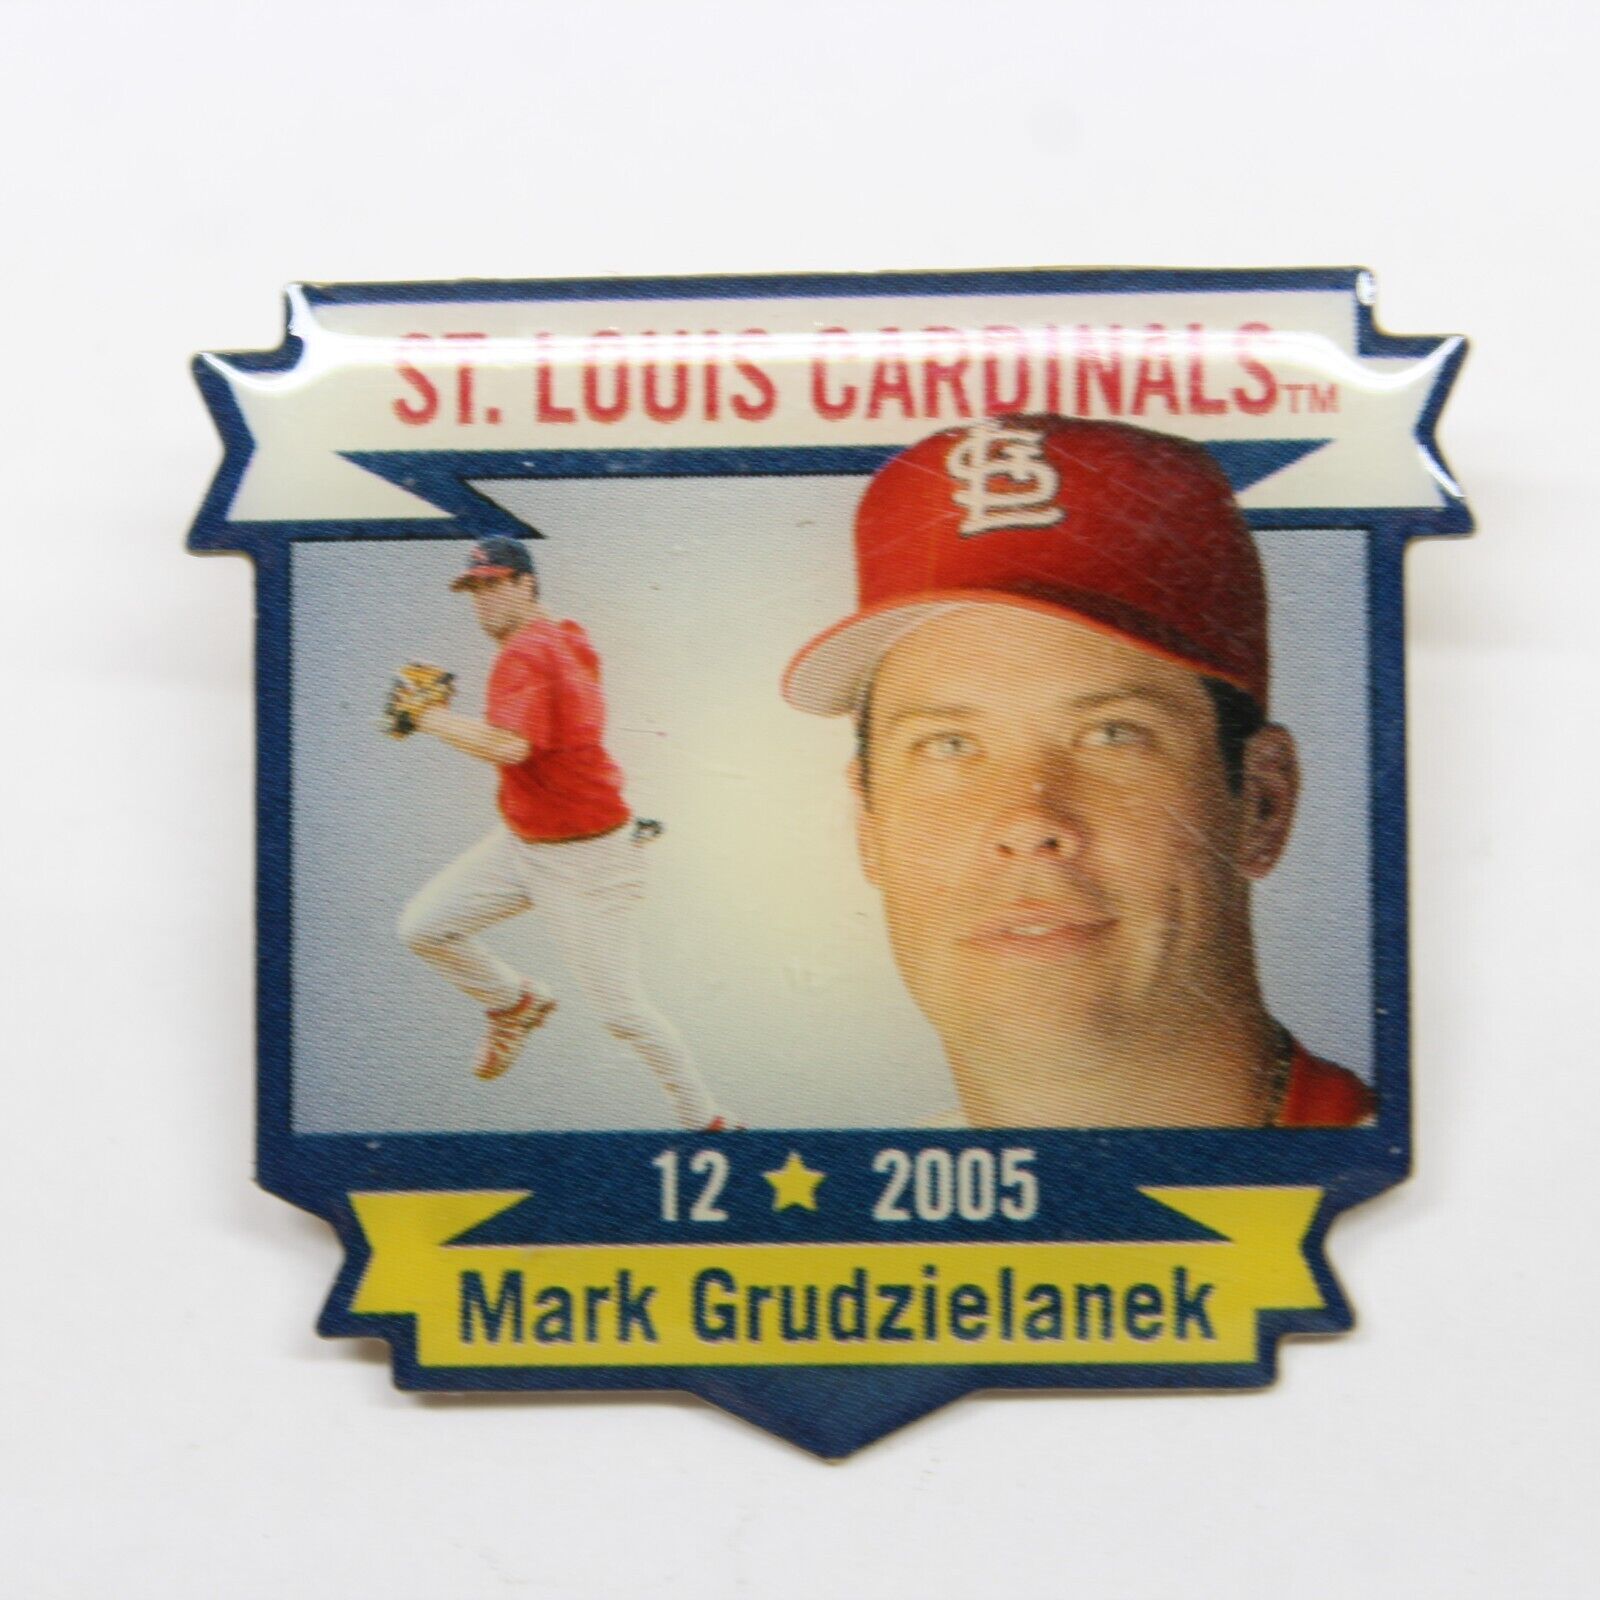 St. Louis Mark Grudzielanek #12 2005 Pin Lapel Enamel Collectible